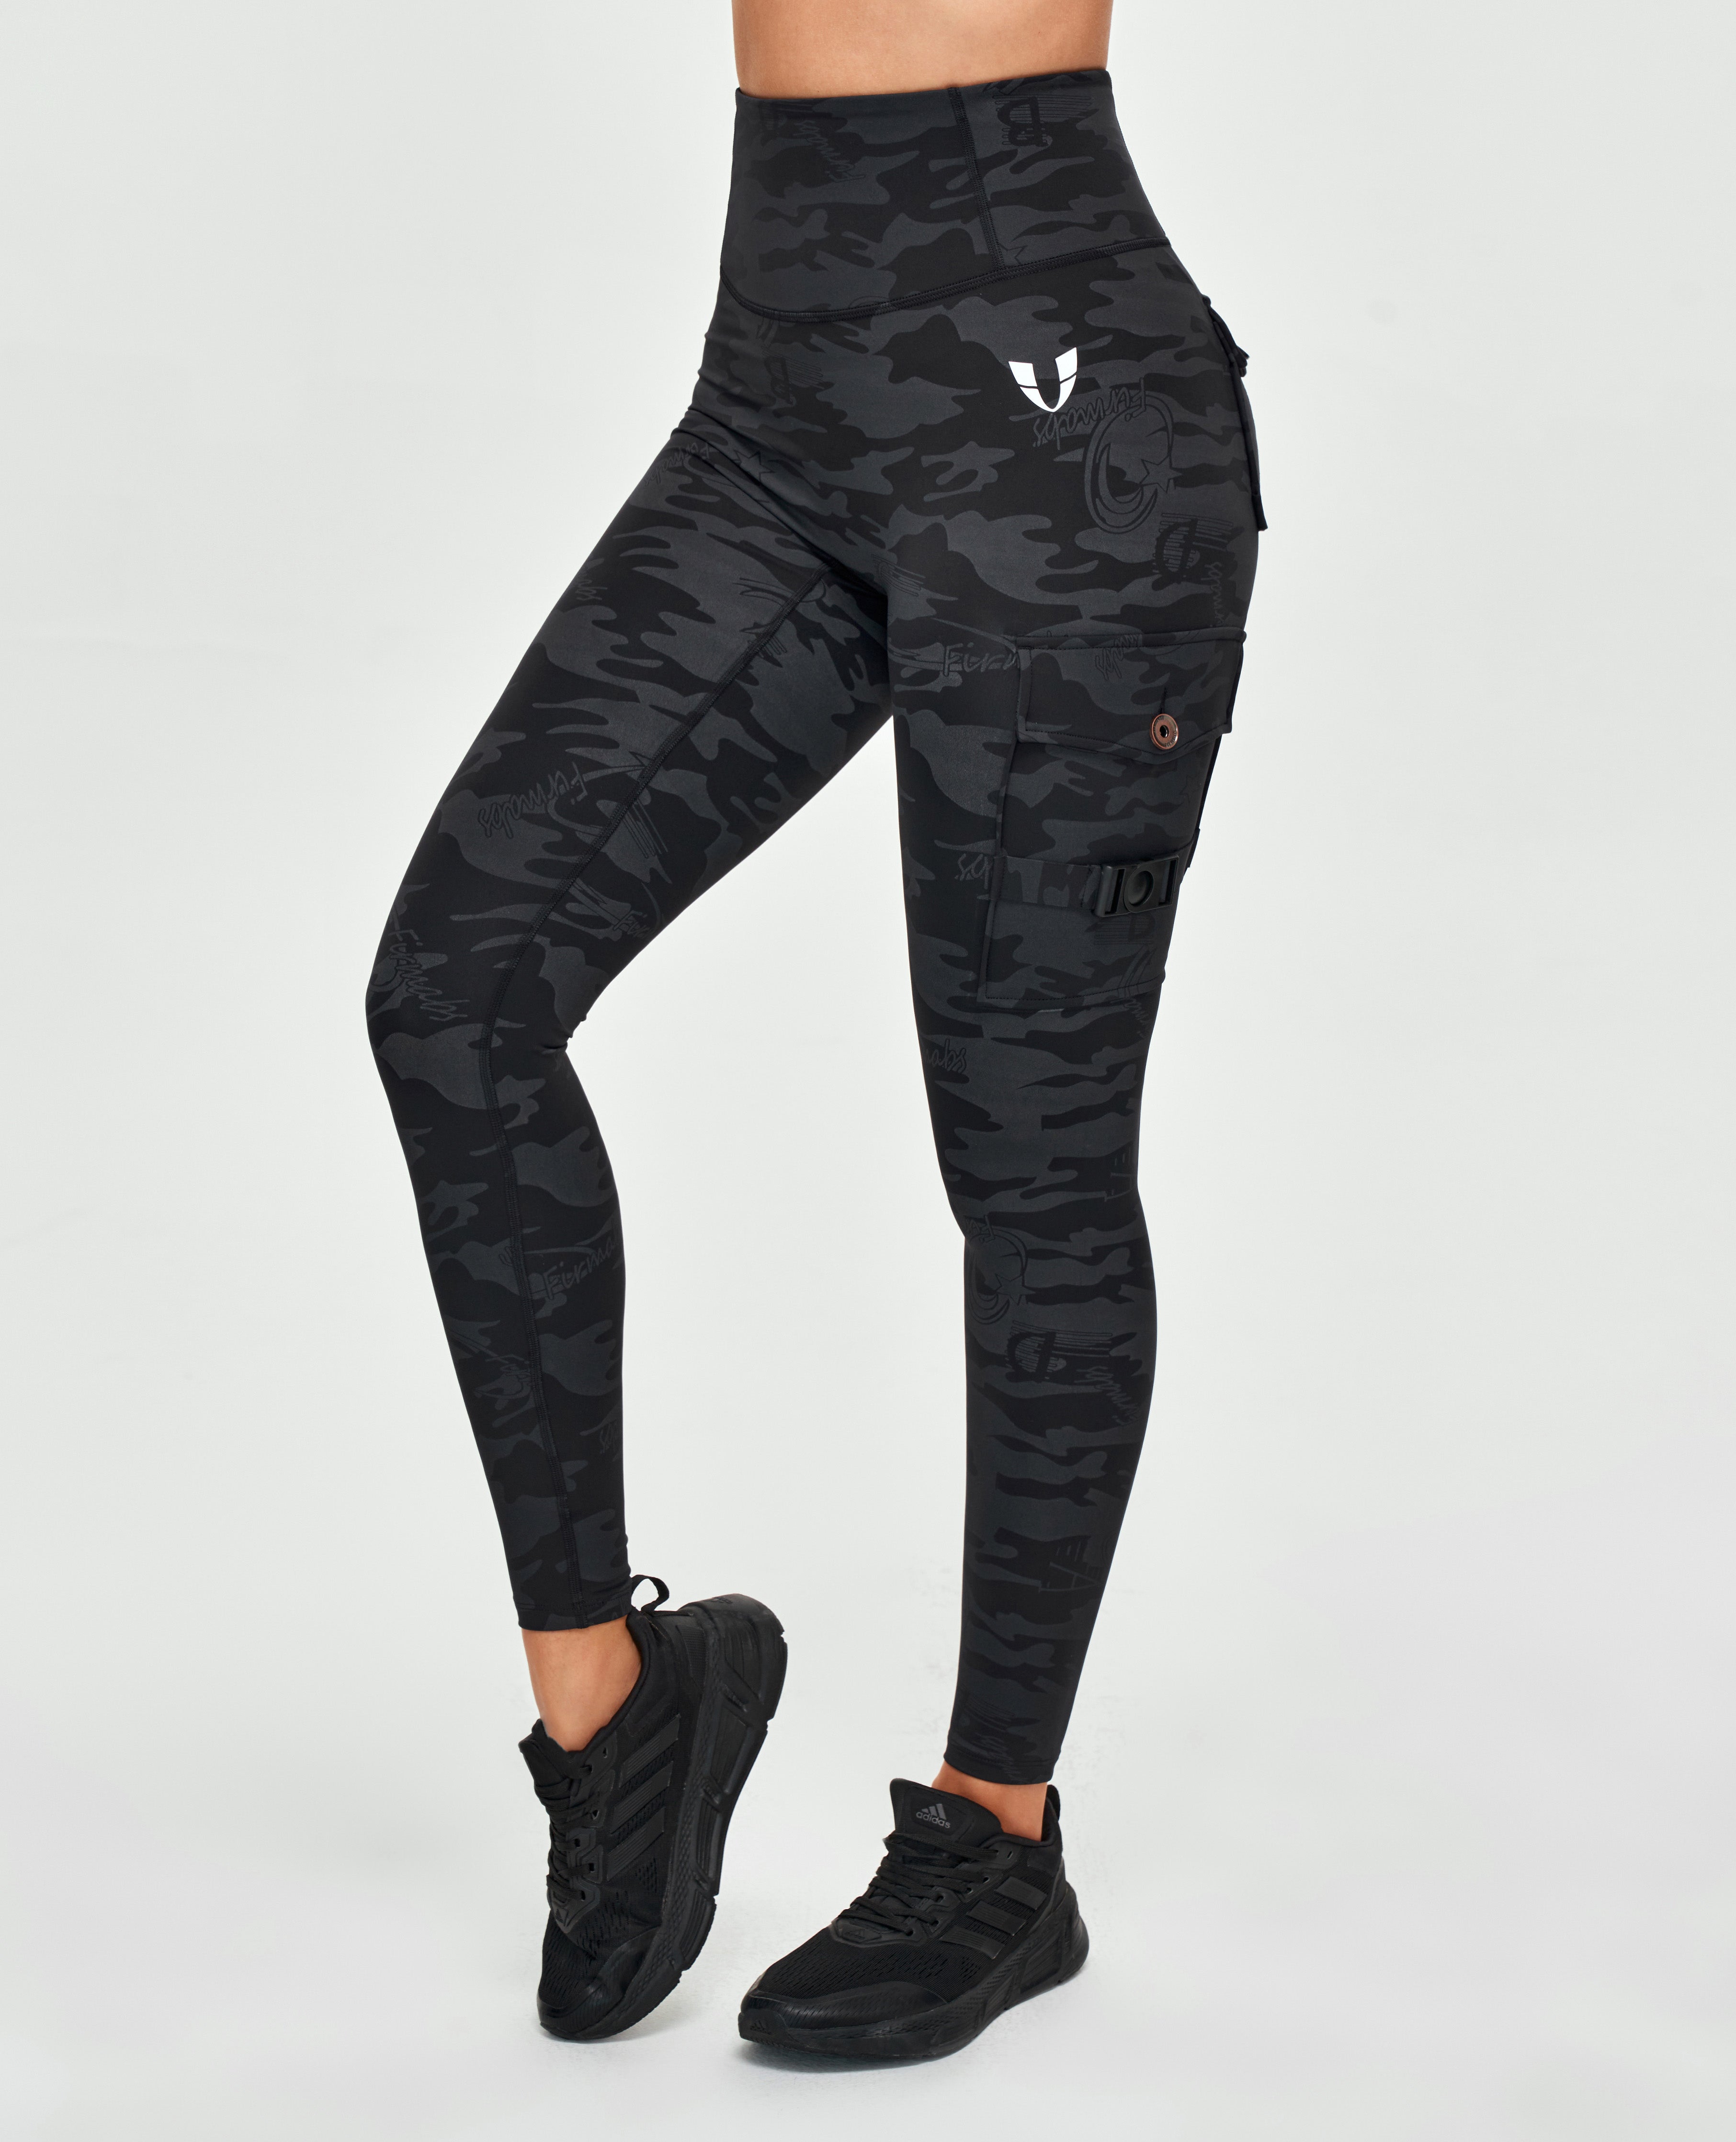 Vogo fitness athletic pants capris criss cross  Athletic pants, Grey  workout leggings, Black leggings women